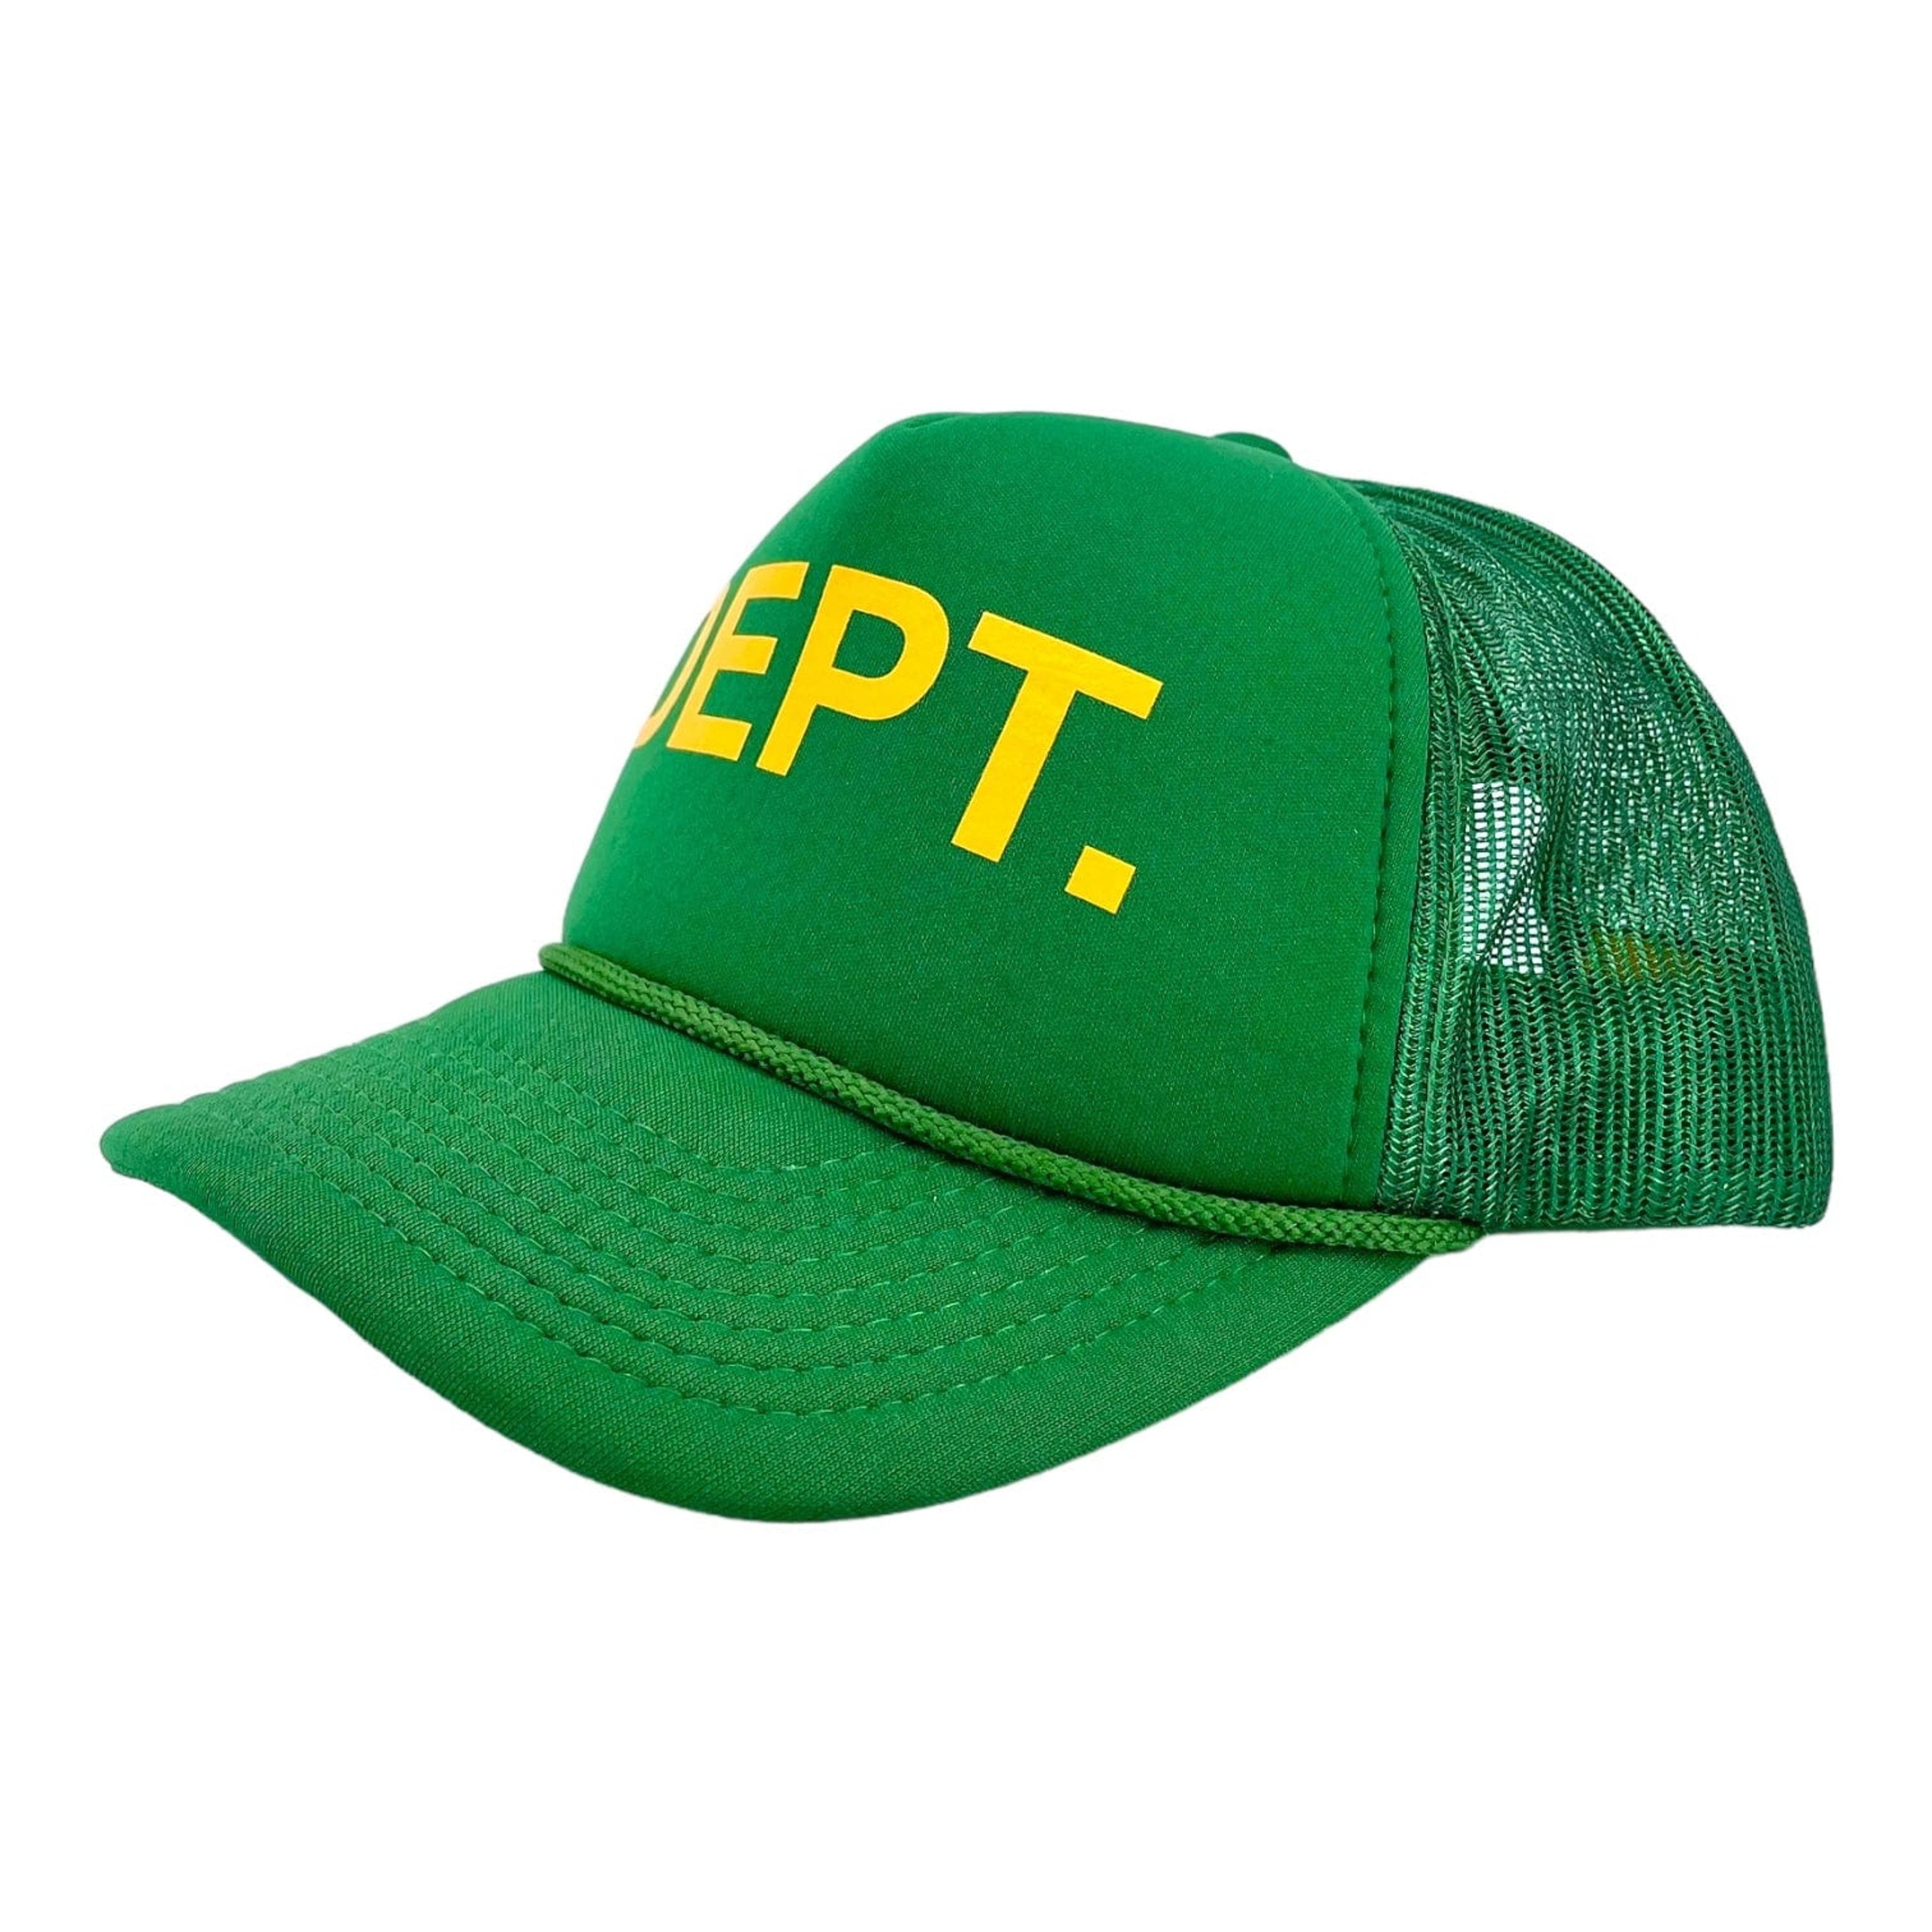 Alternate View 4 of Gallery Department DEPT. Logo Trucker Hat Green Yellow